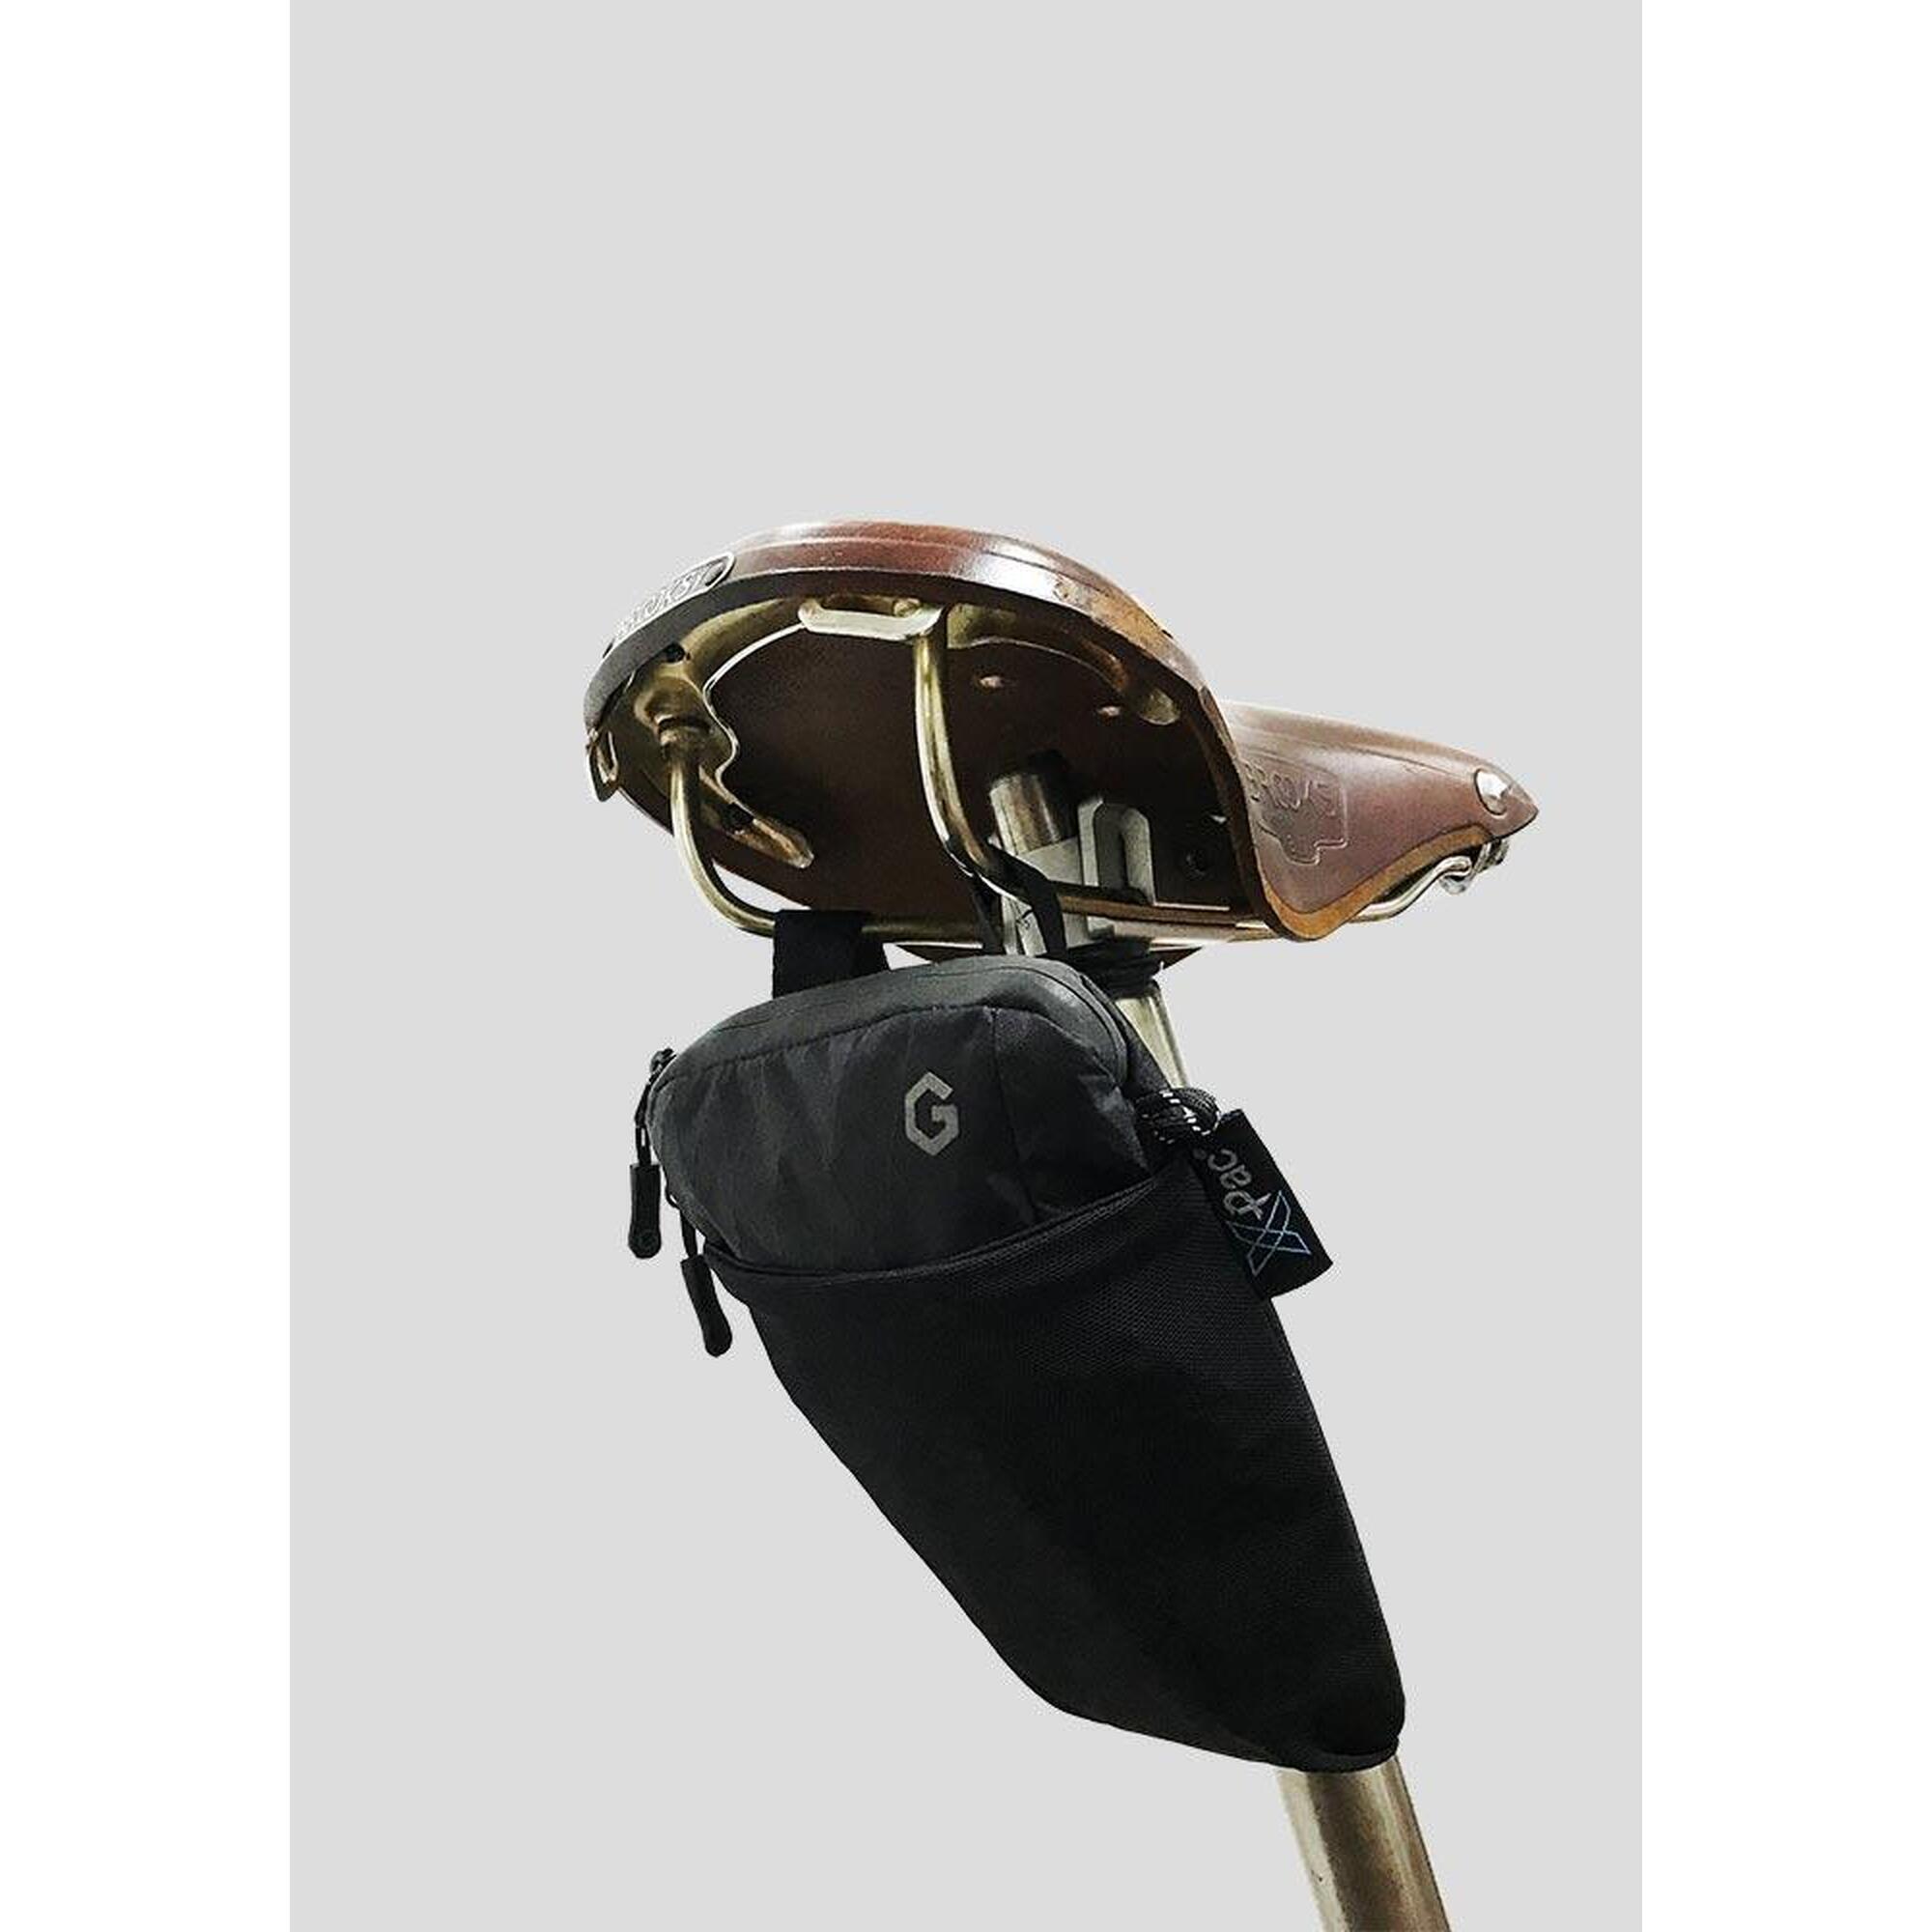 HEXA.GO Ultra Light Saddle Bag - Black (Compatible with Brompton)